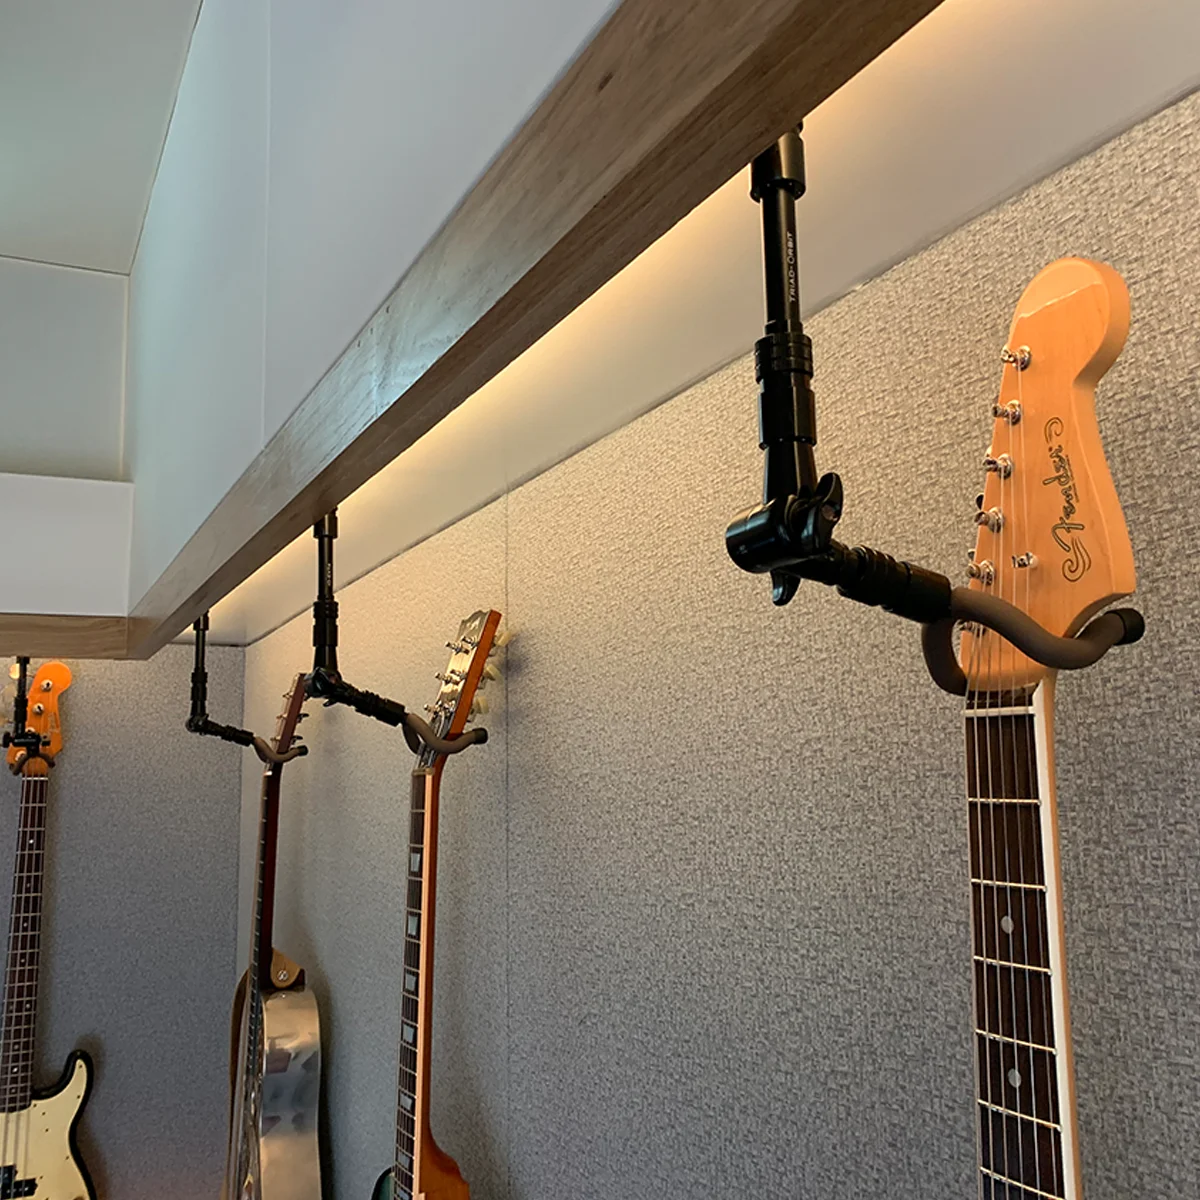 iO-SS1-G, String Swing Guitar Hanger - Long - Triad Orbit